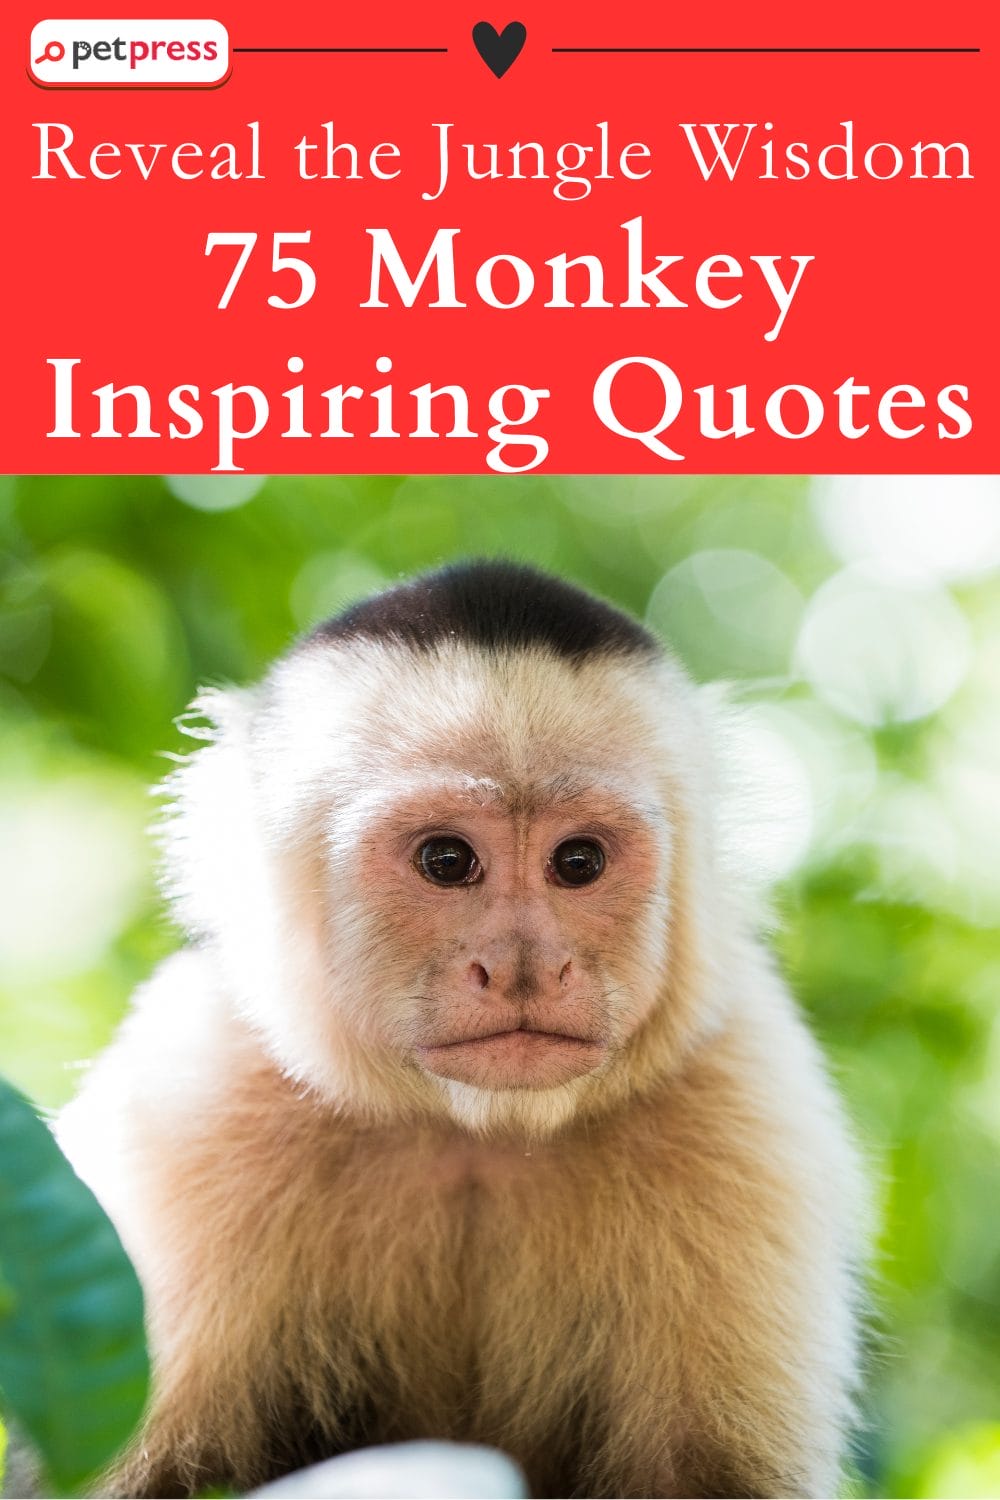 75 Monkey Inspiring Quotes That Revealed the Jungle Wisdom - PetPress